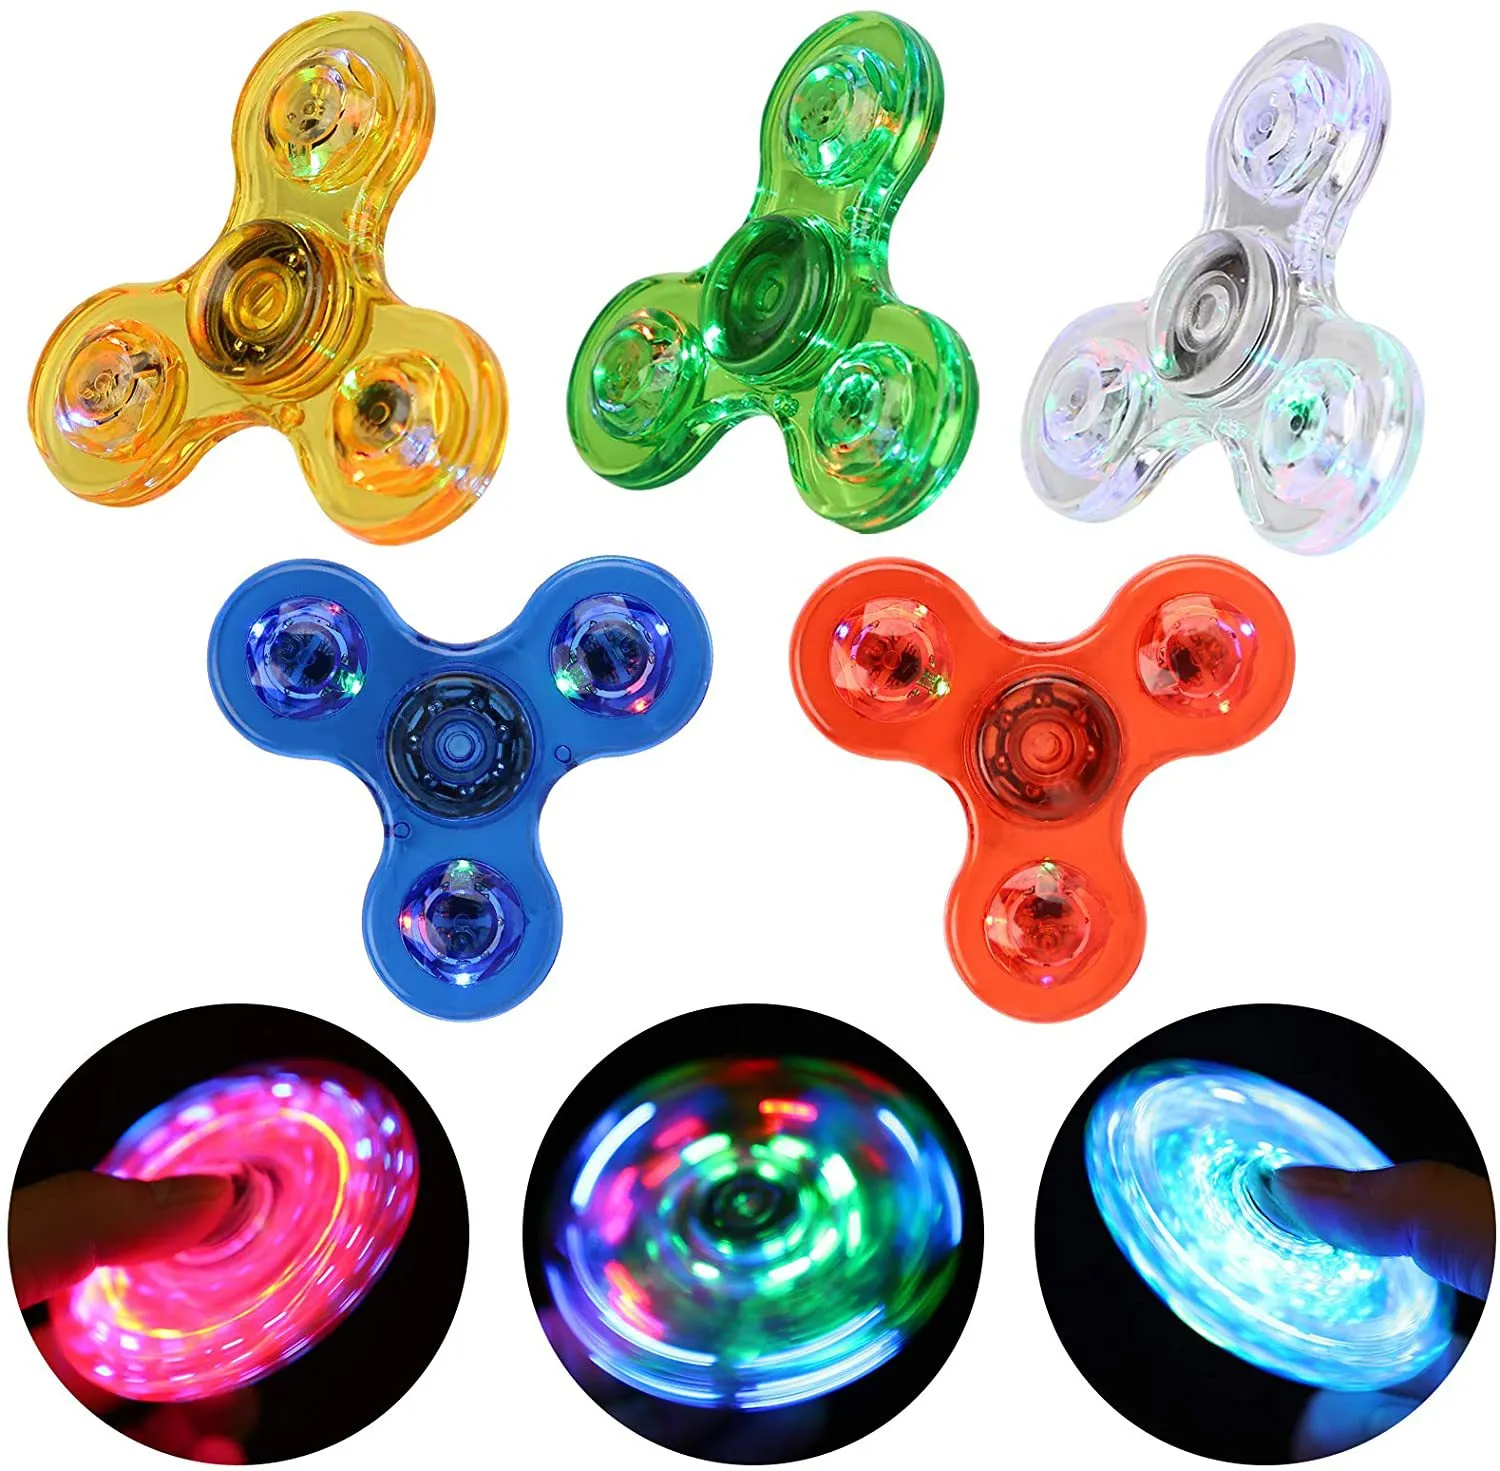 LED transparente Fidget juguete Spinner juguetes para dedos 6 colores dedo Gyro adultos niños descompresión juguete mano Spinners